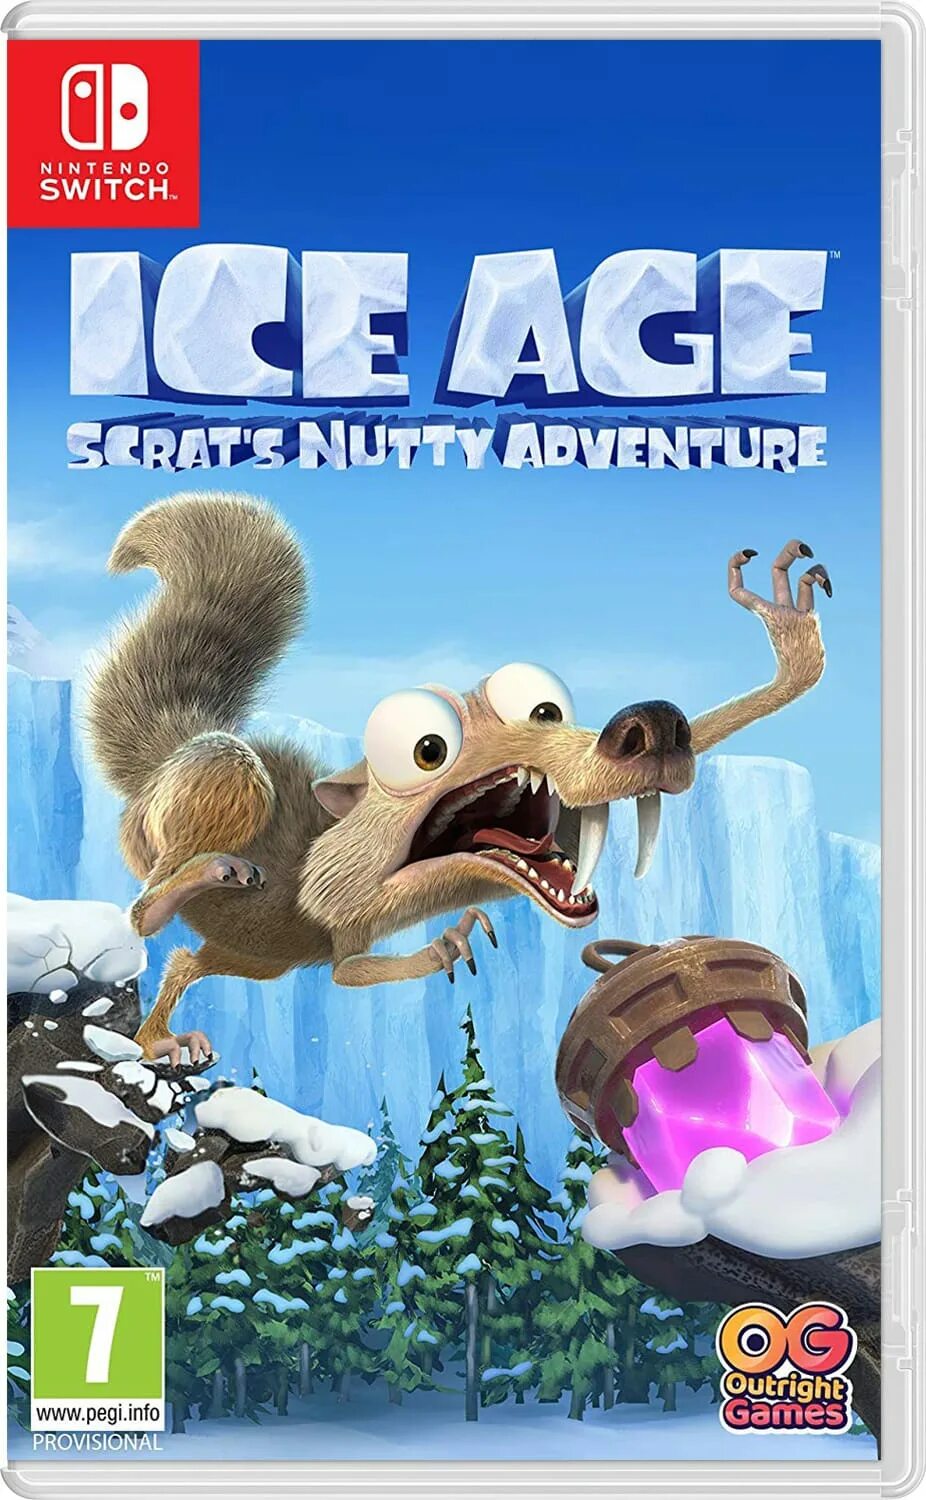 Ice age на Нинтендо свитч. Ледниковый период сумасшедшее приключение Скрэта (Nintendo Switch). Игра Ледниковый период Scrats Nutty. Ice age Nutty Adventure. Ice age scrats nutty